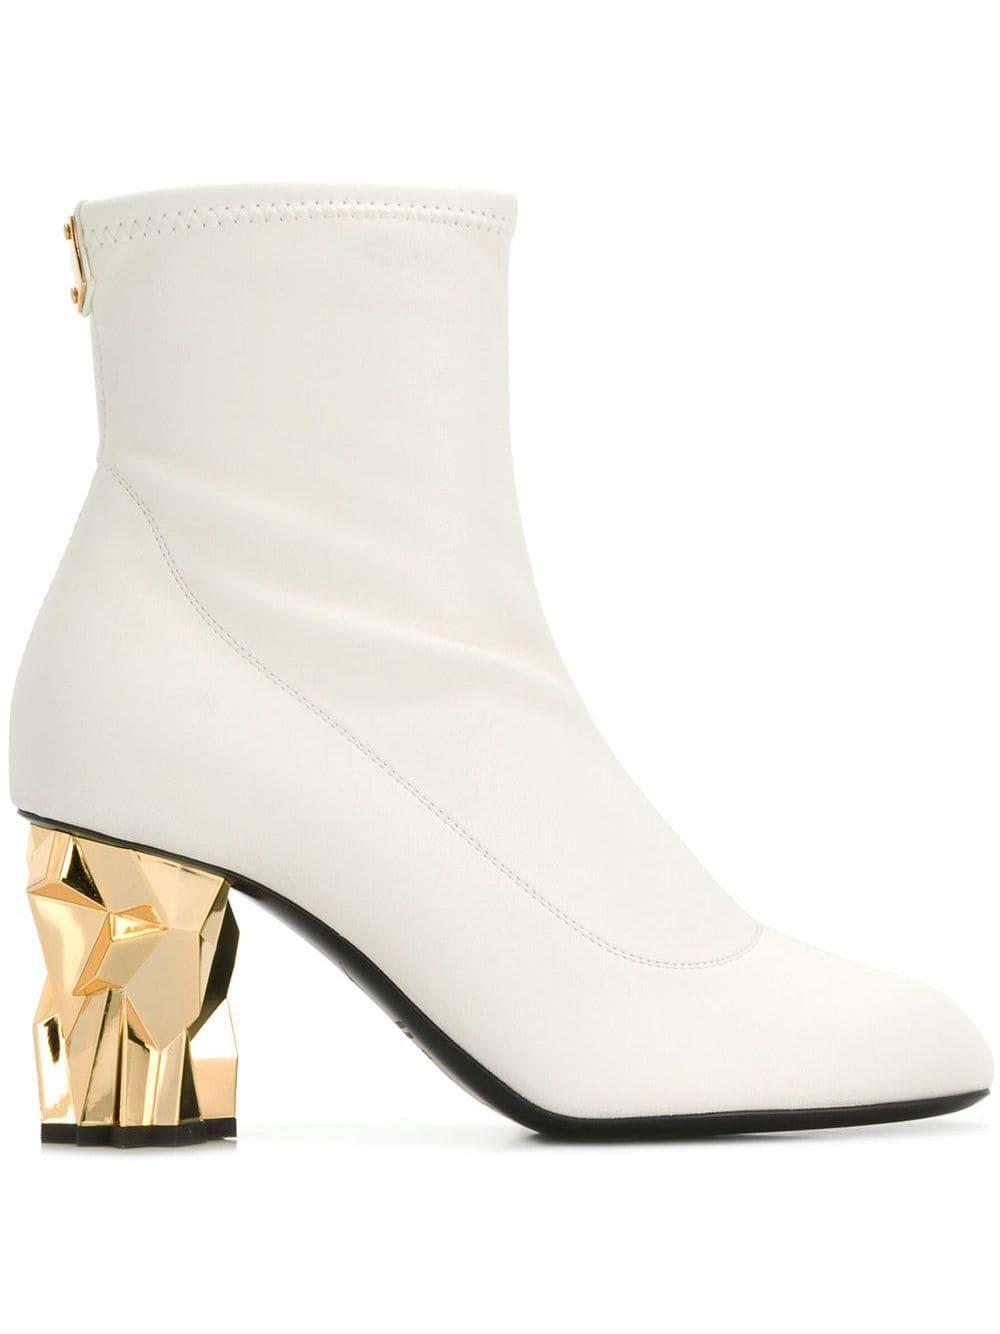 white boot heels